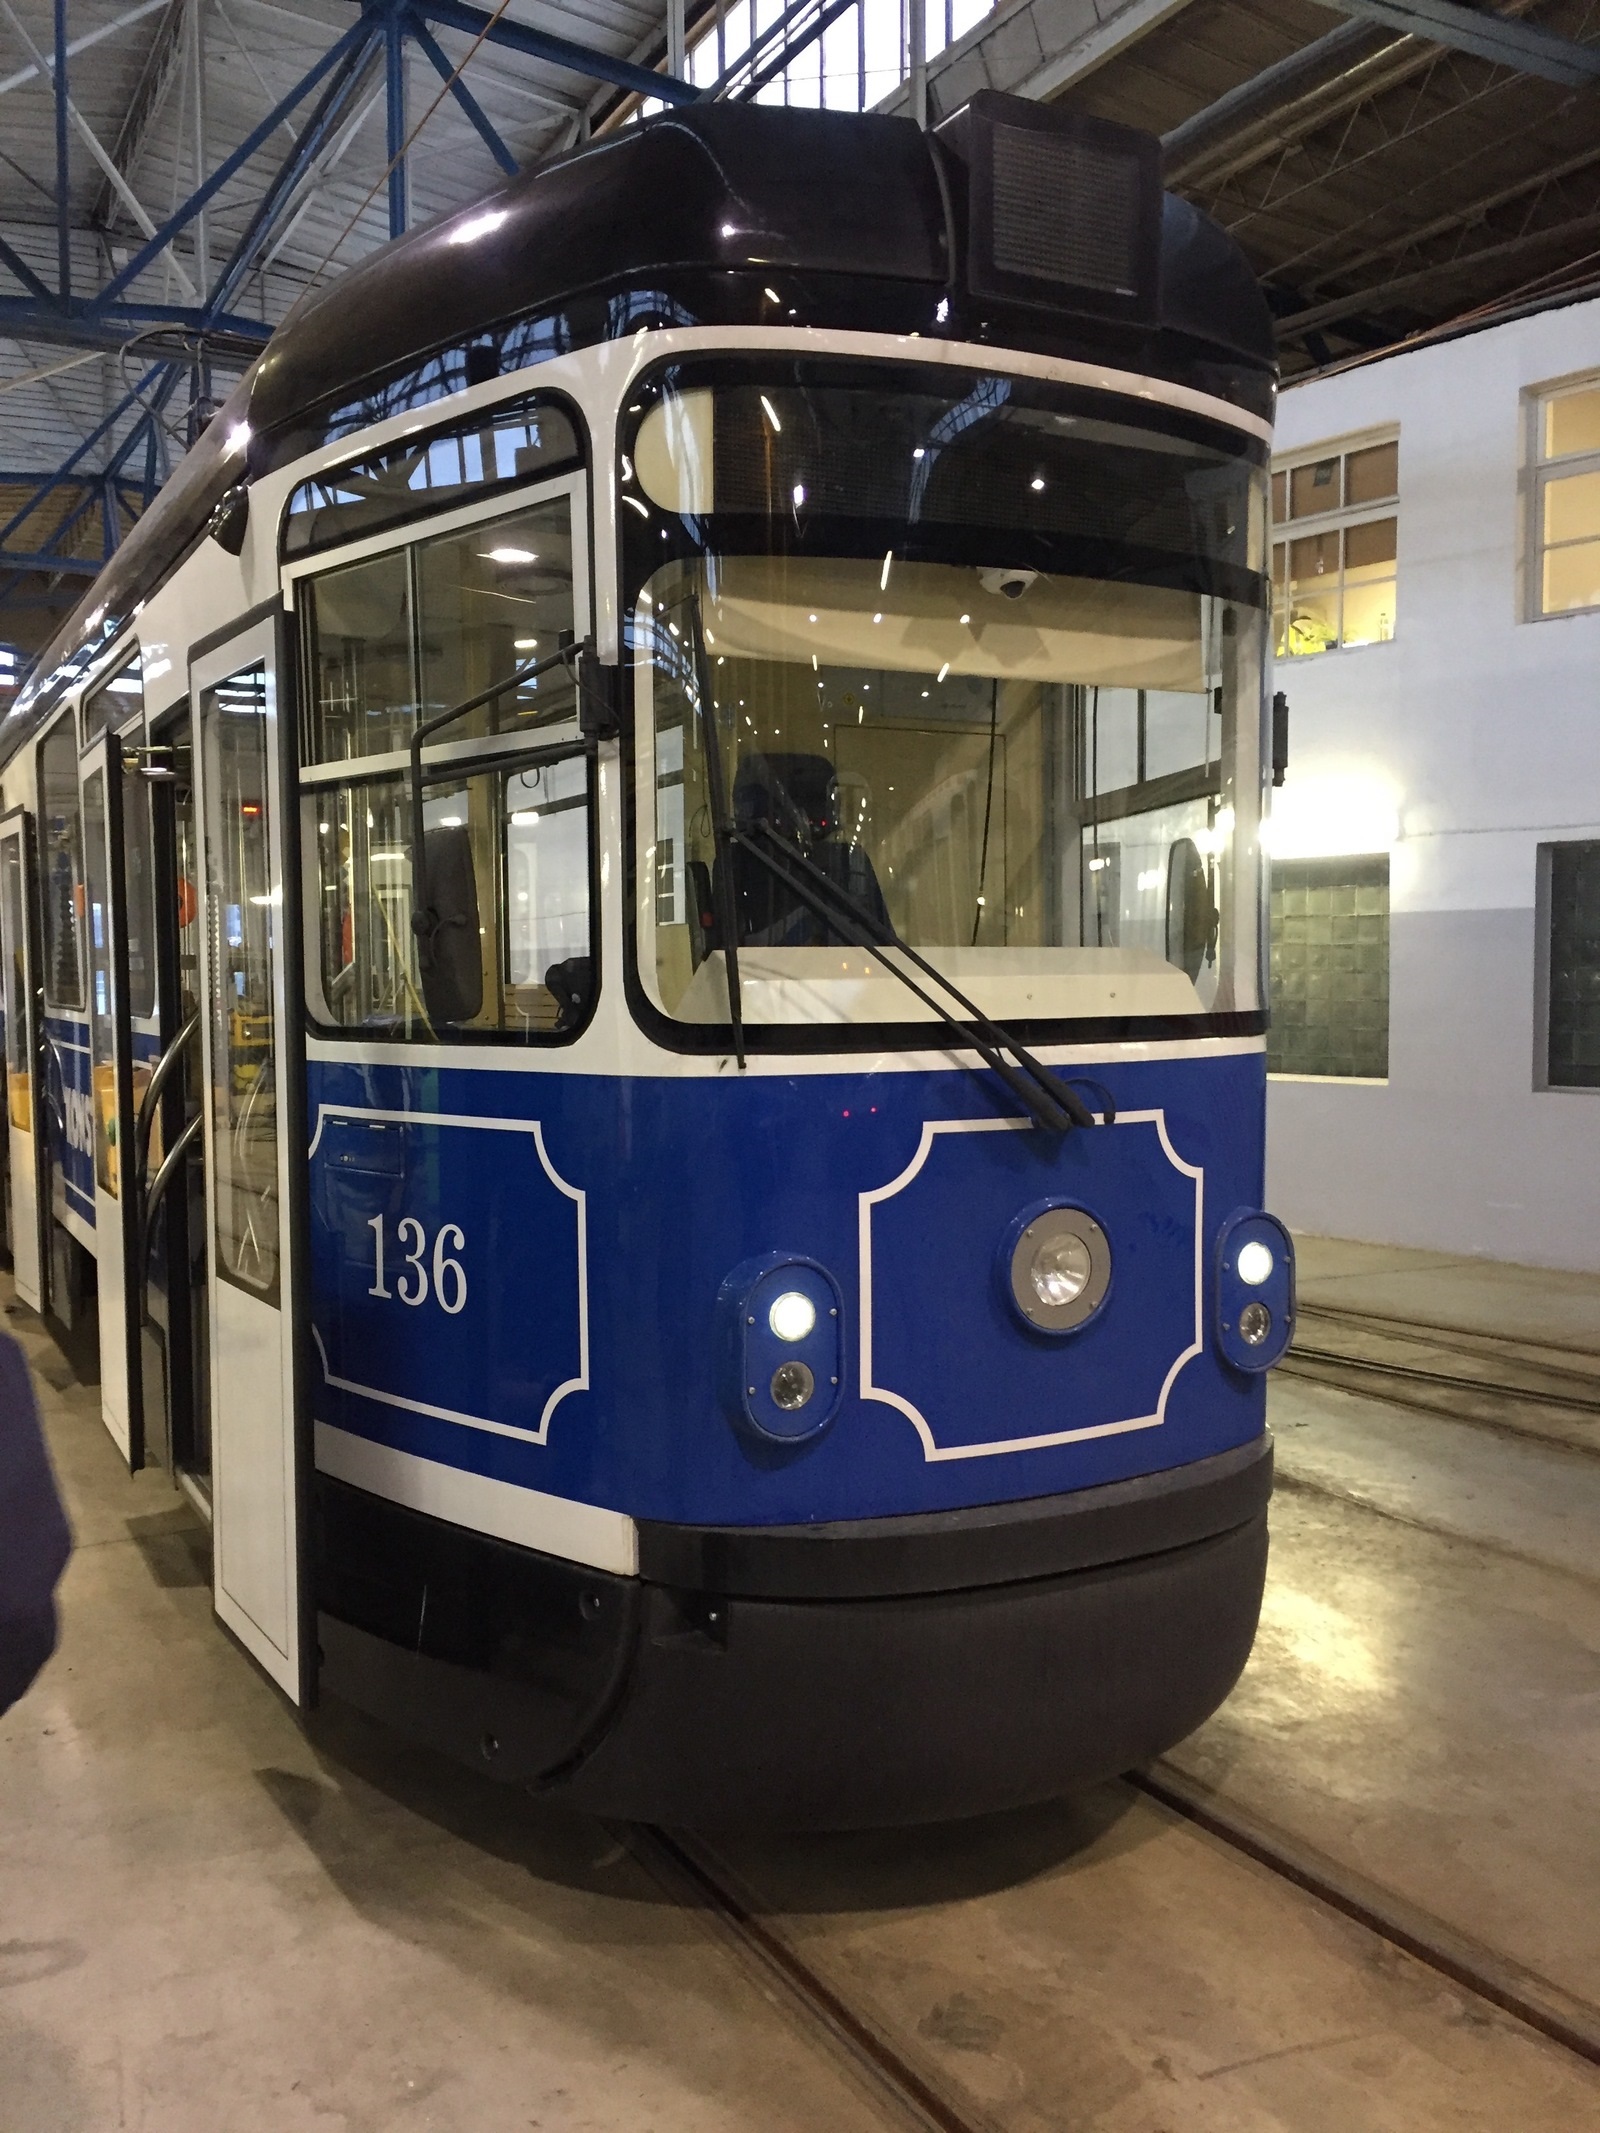 Old retro tram after restoration. Klaasart made new windows for custom tram needs